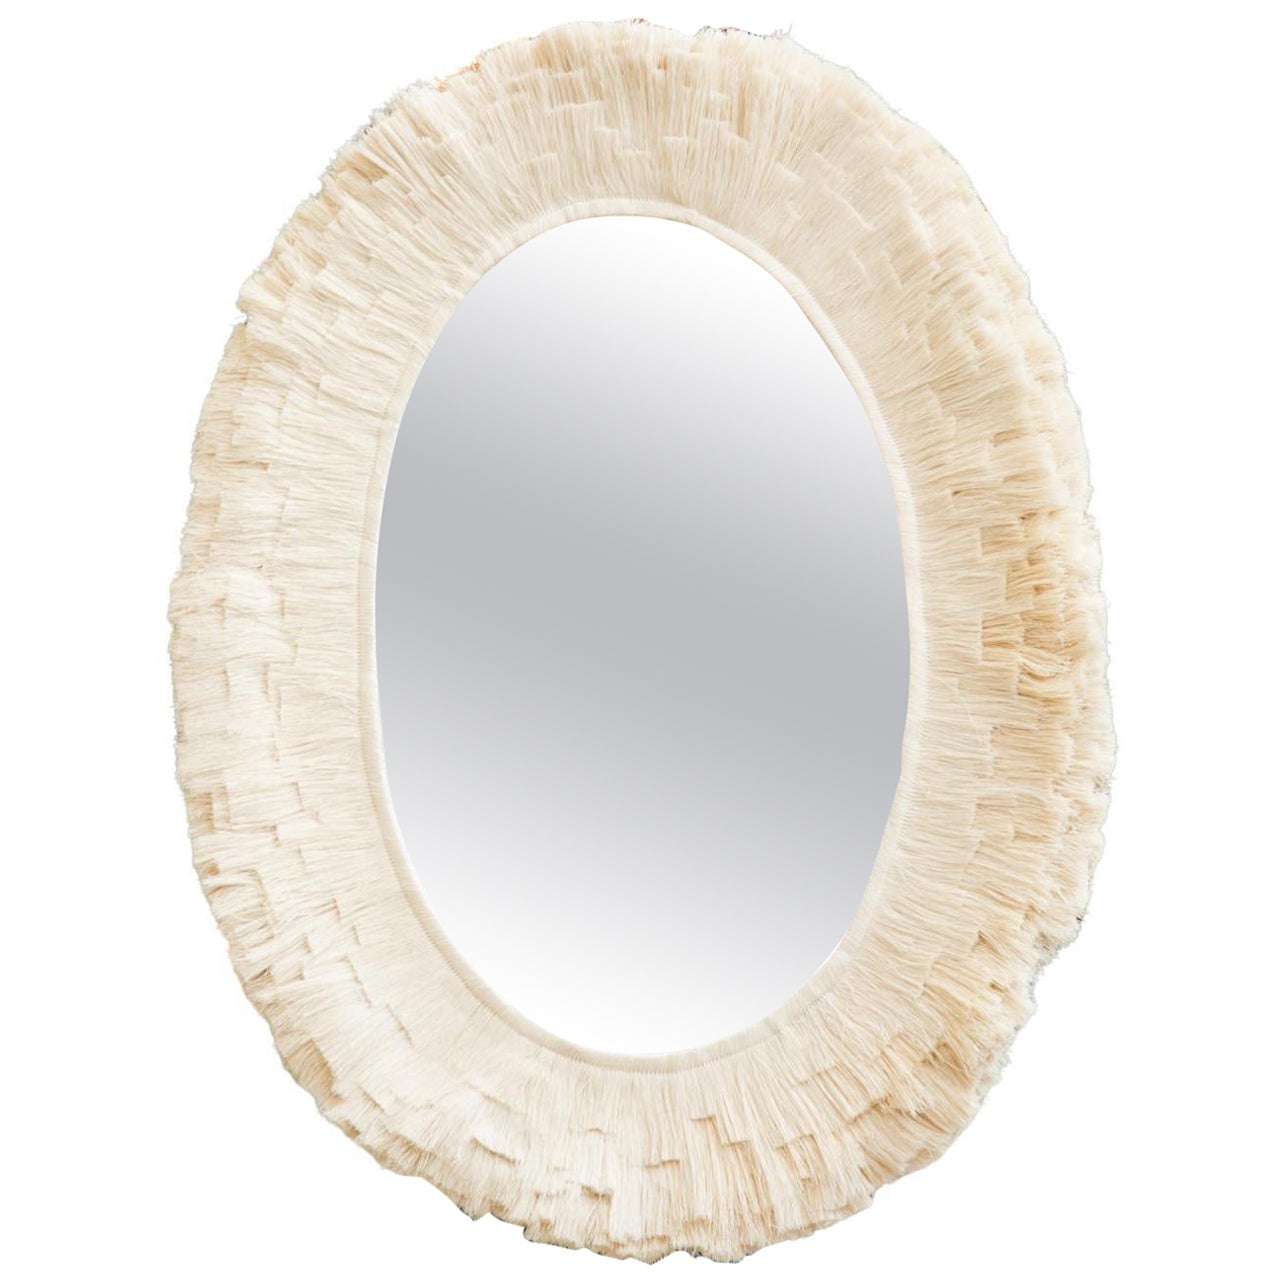 Oval Mirror by Caralarga